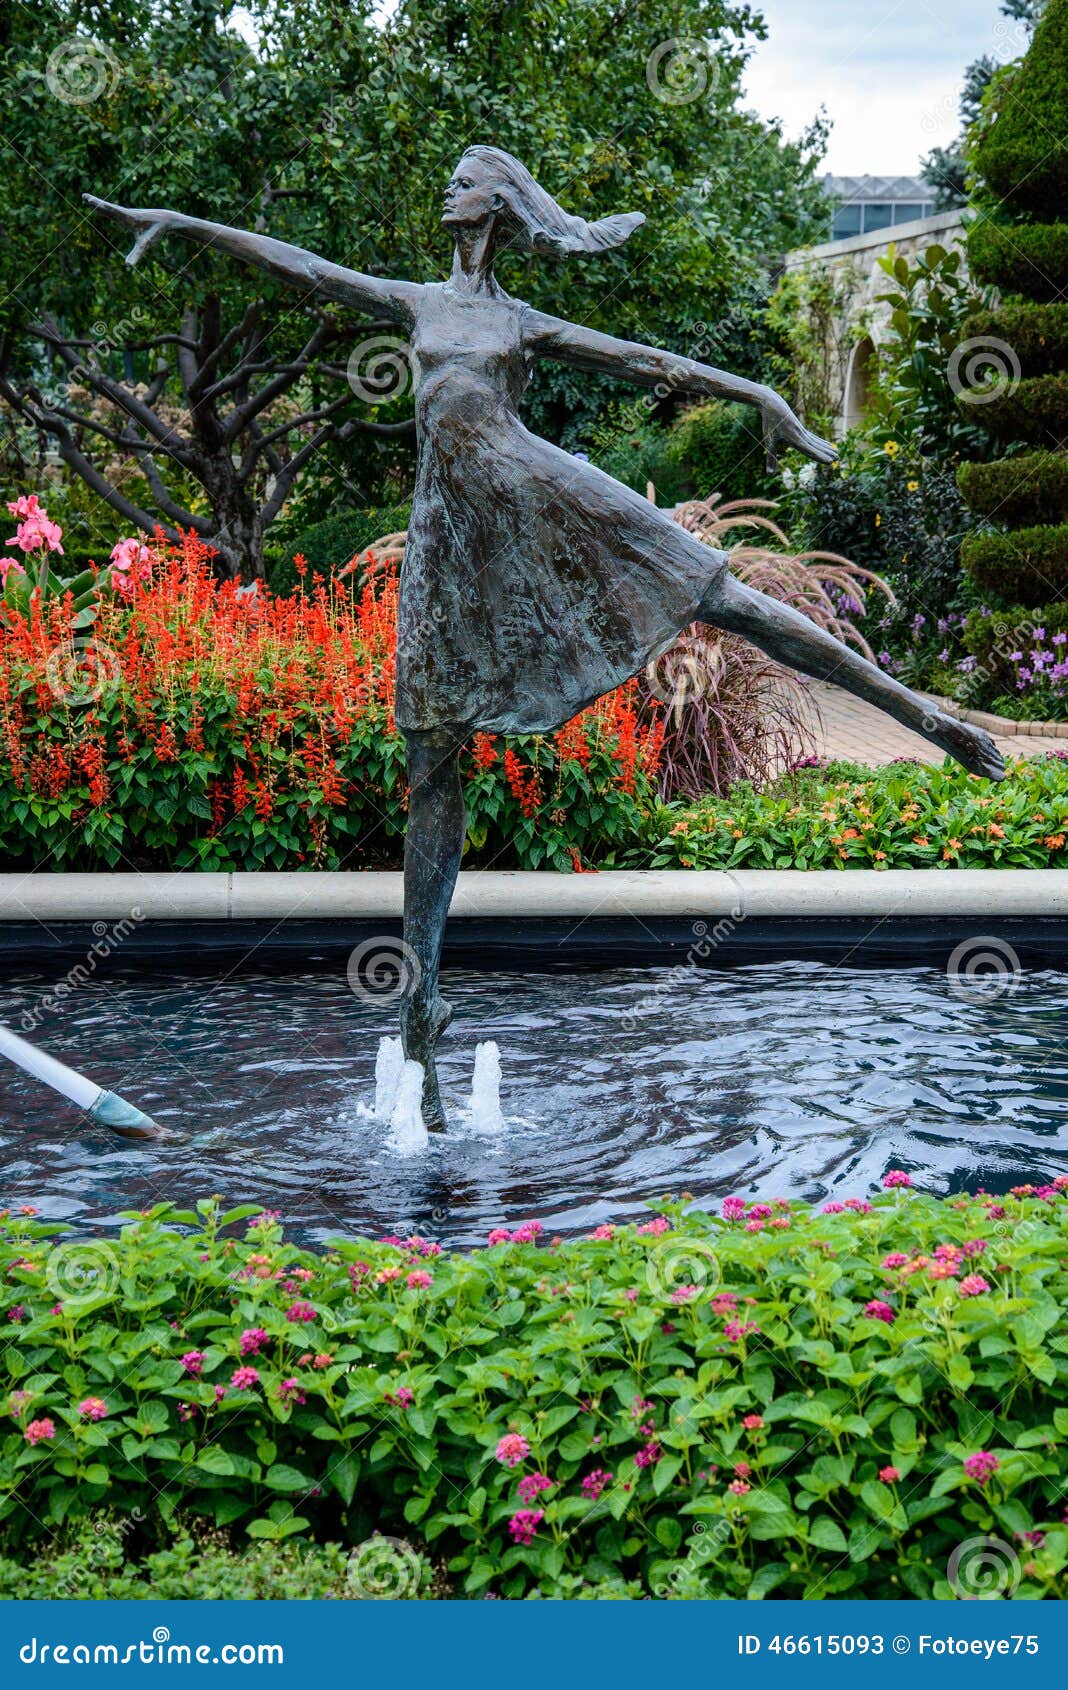 Beautiful Flower Garden With Fountain